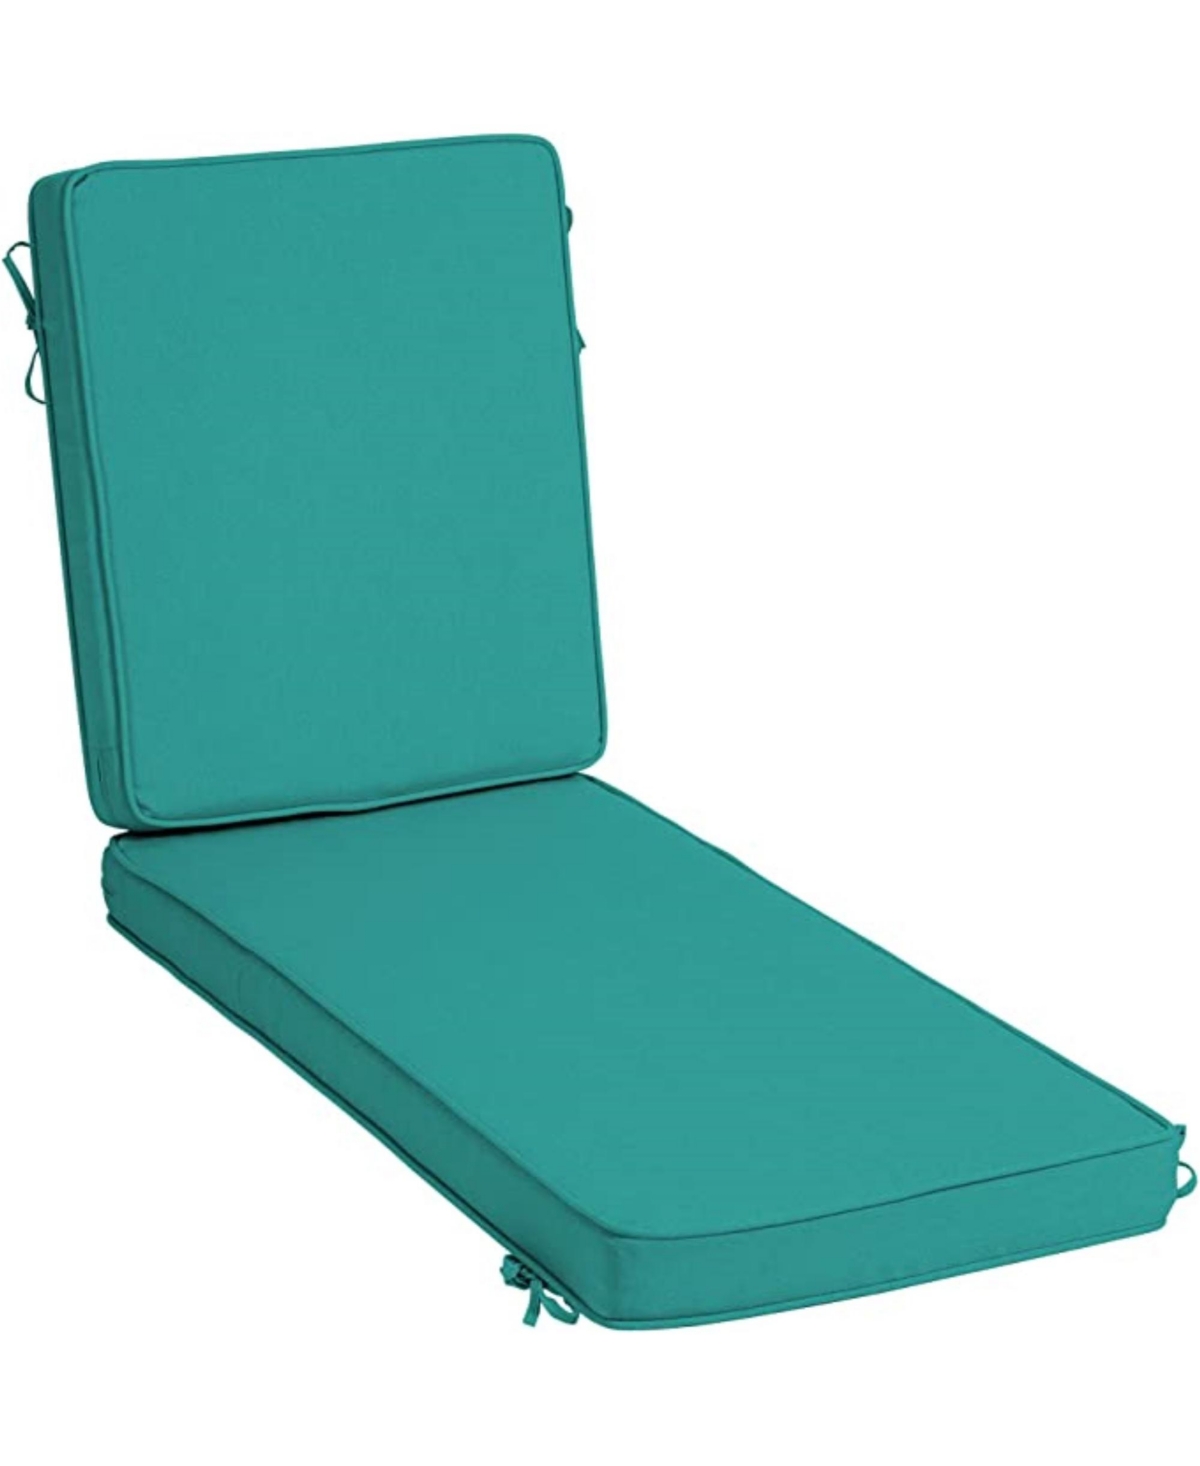 Arden ProFoam EverTru Acrylic Outdoor Chaise Lounge Cushion Aqua - Blue